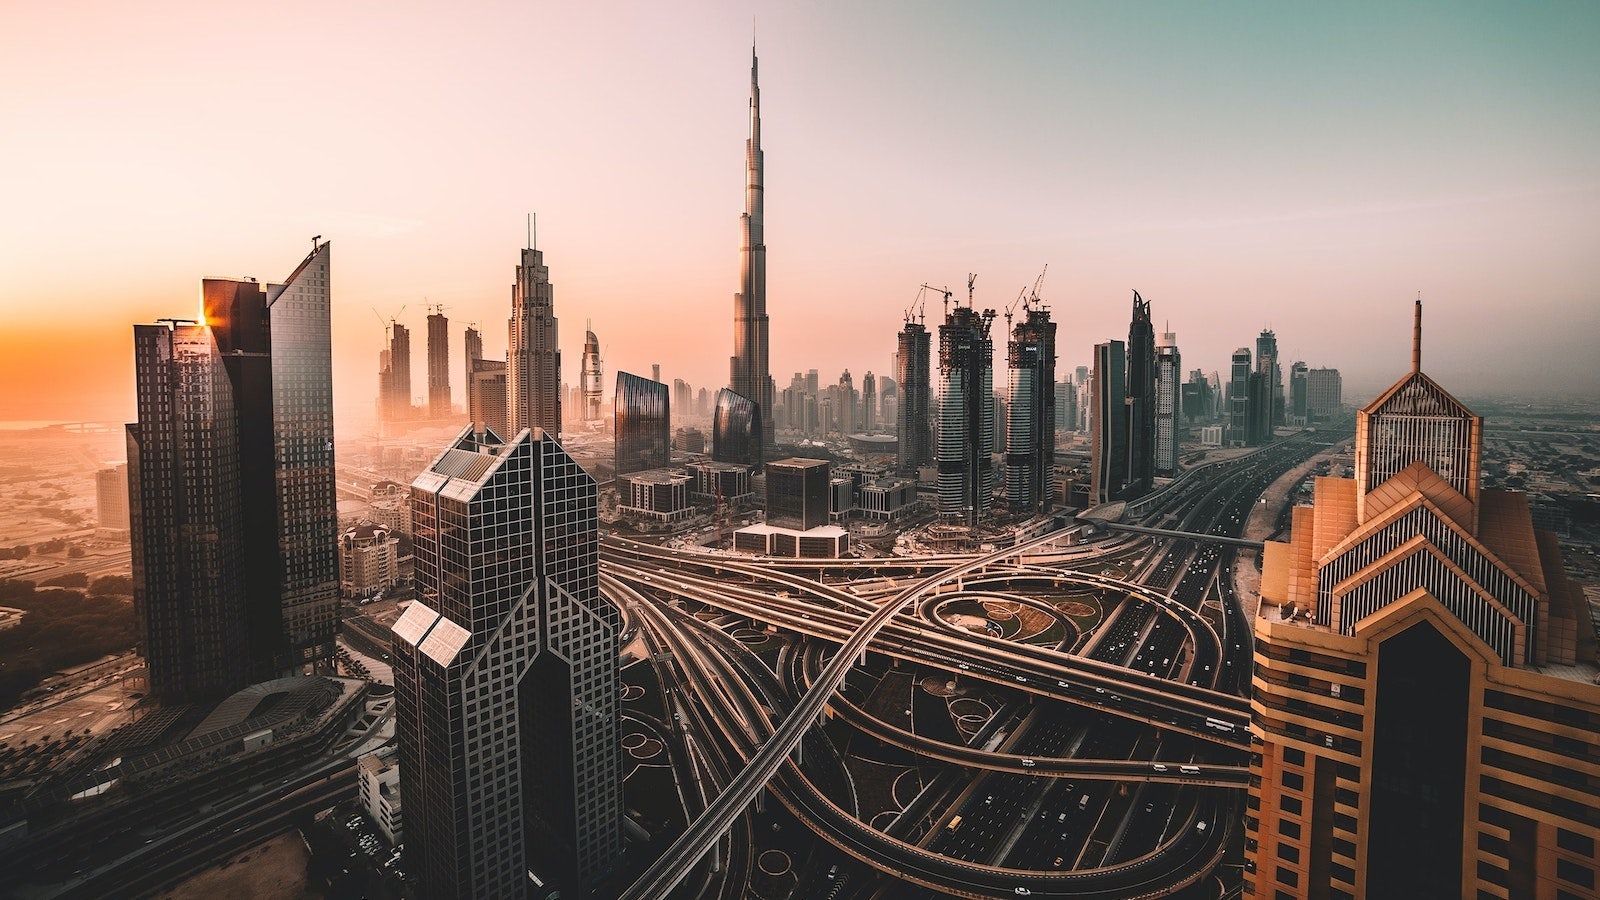 Nearly one million Chinese tourists visited Dubai in 2019. Image: Unsplash